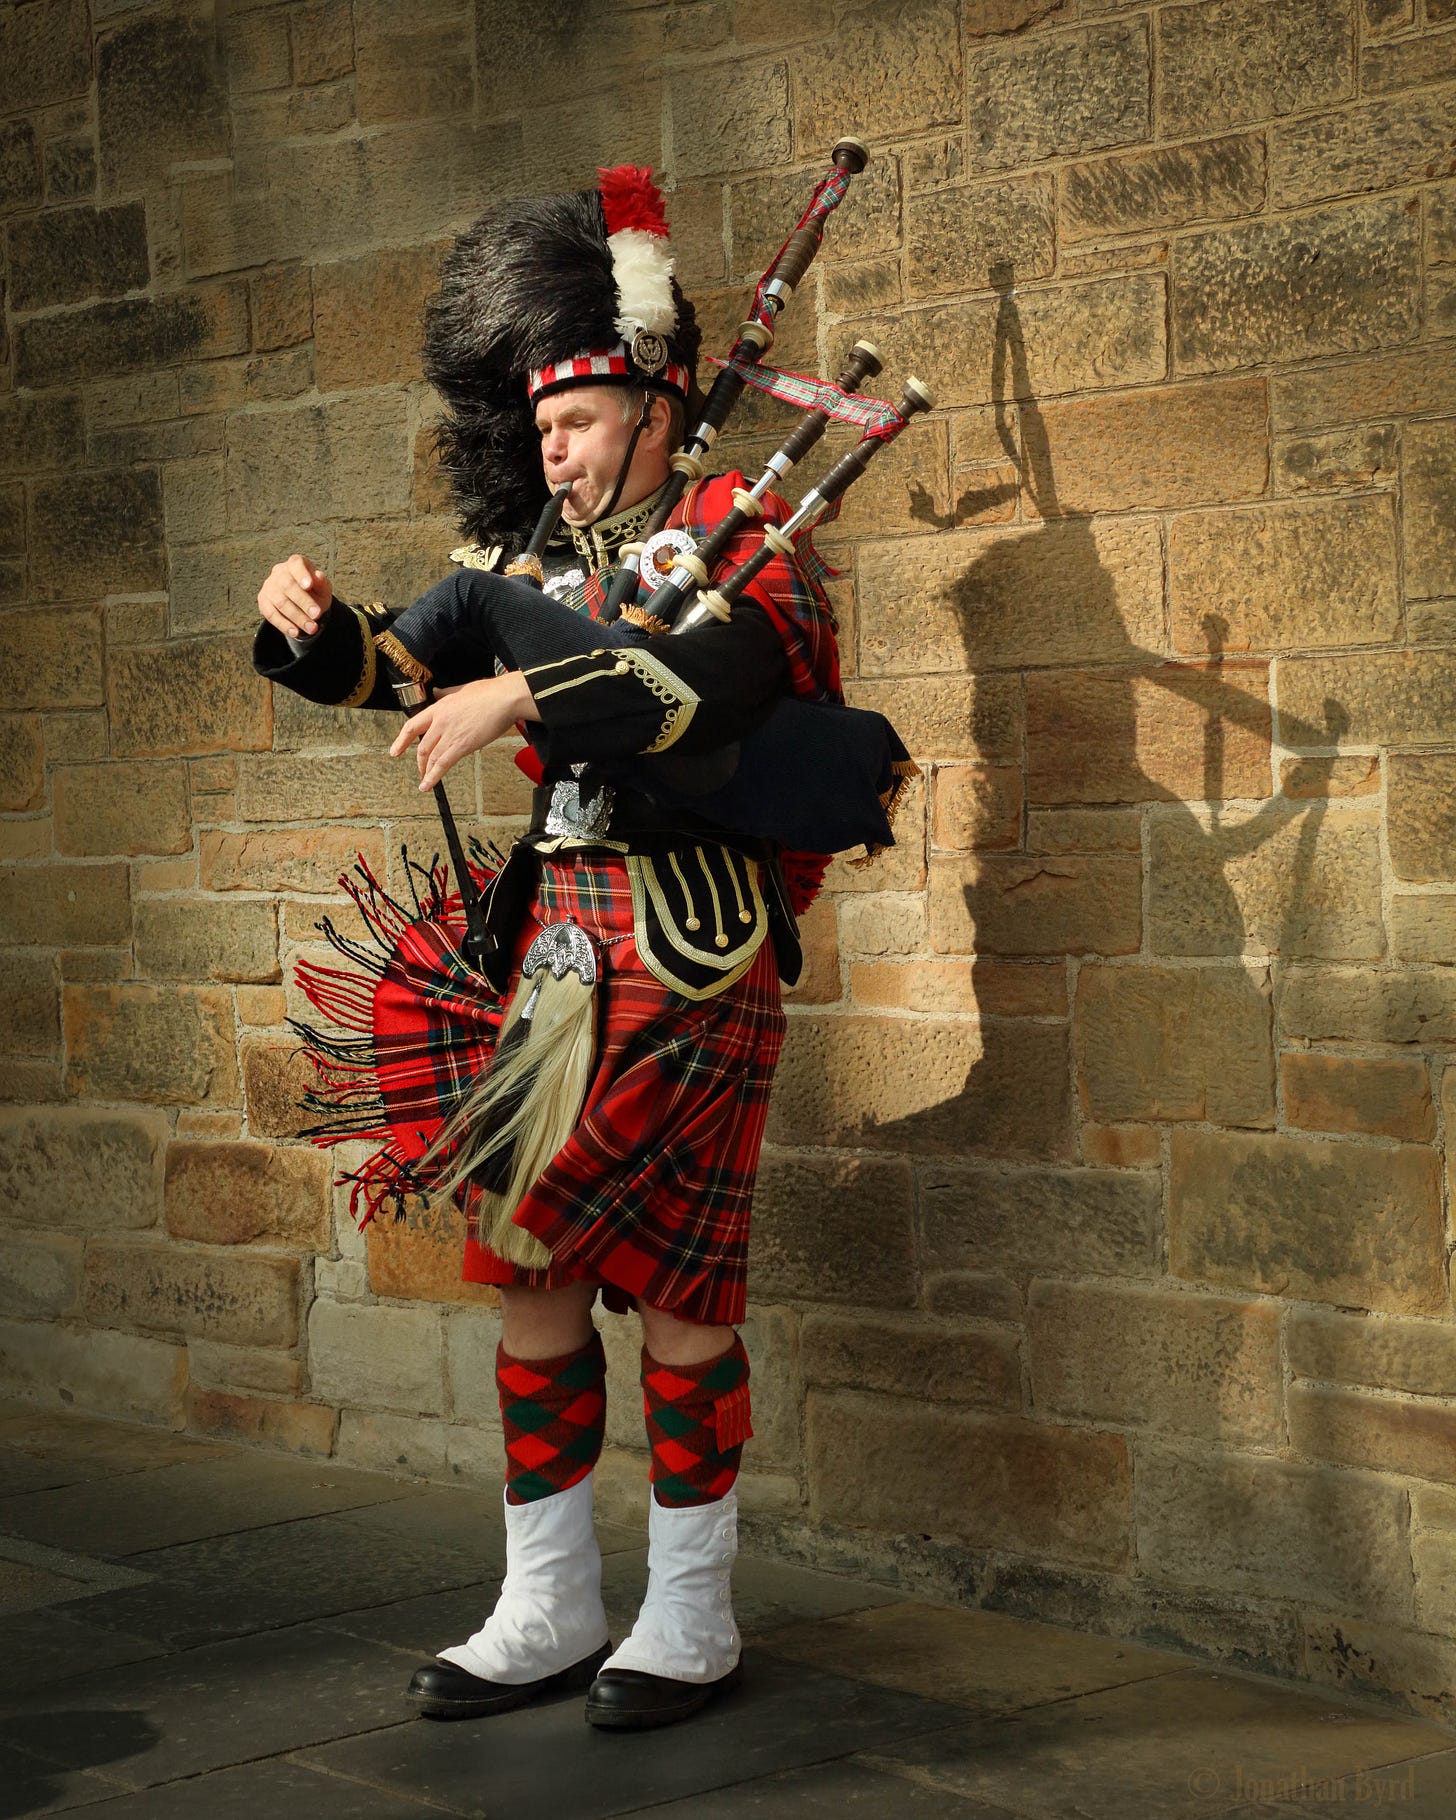 a bagpiper plays on a windy day in Edinburgh